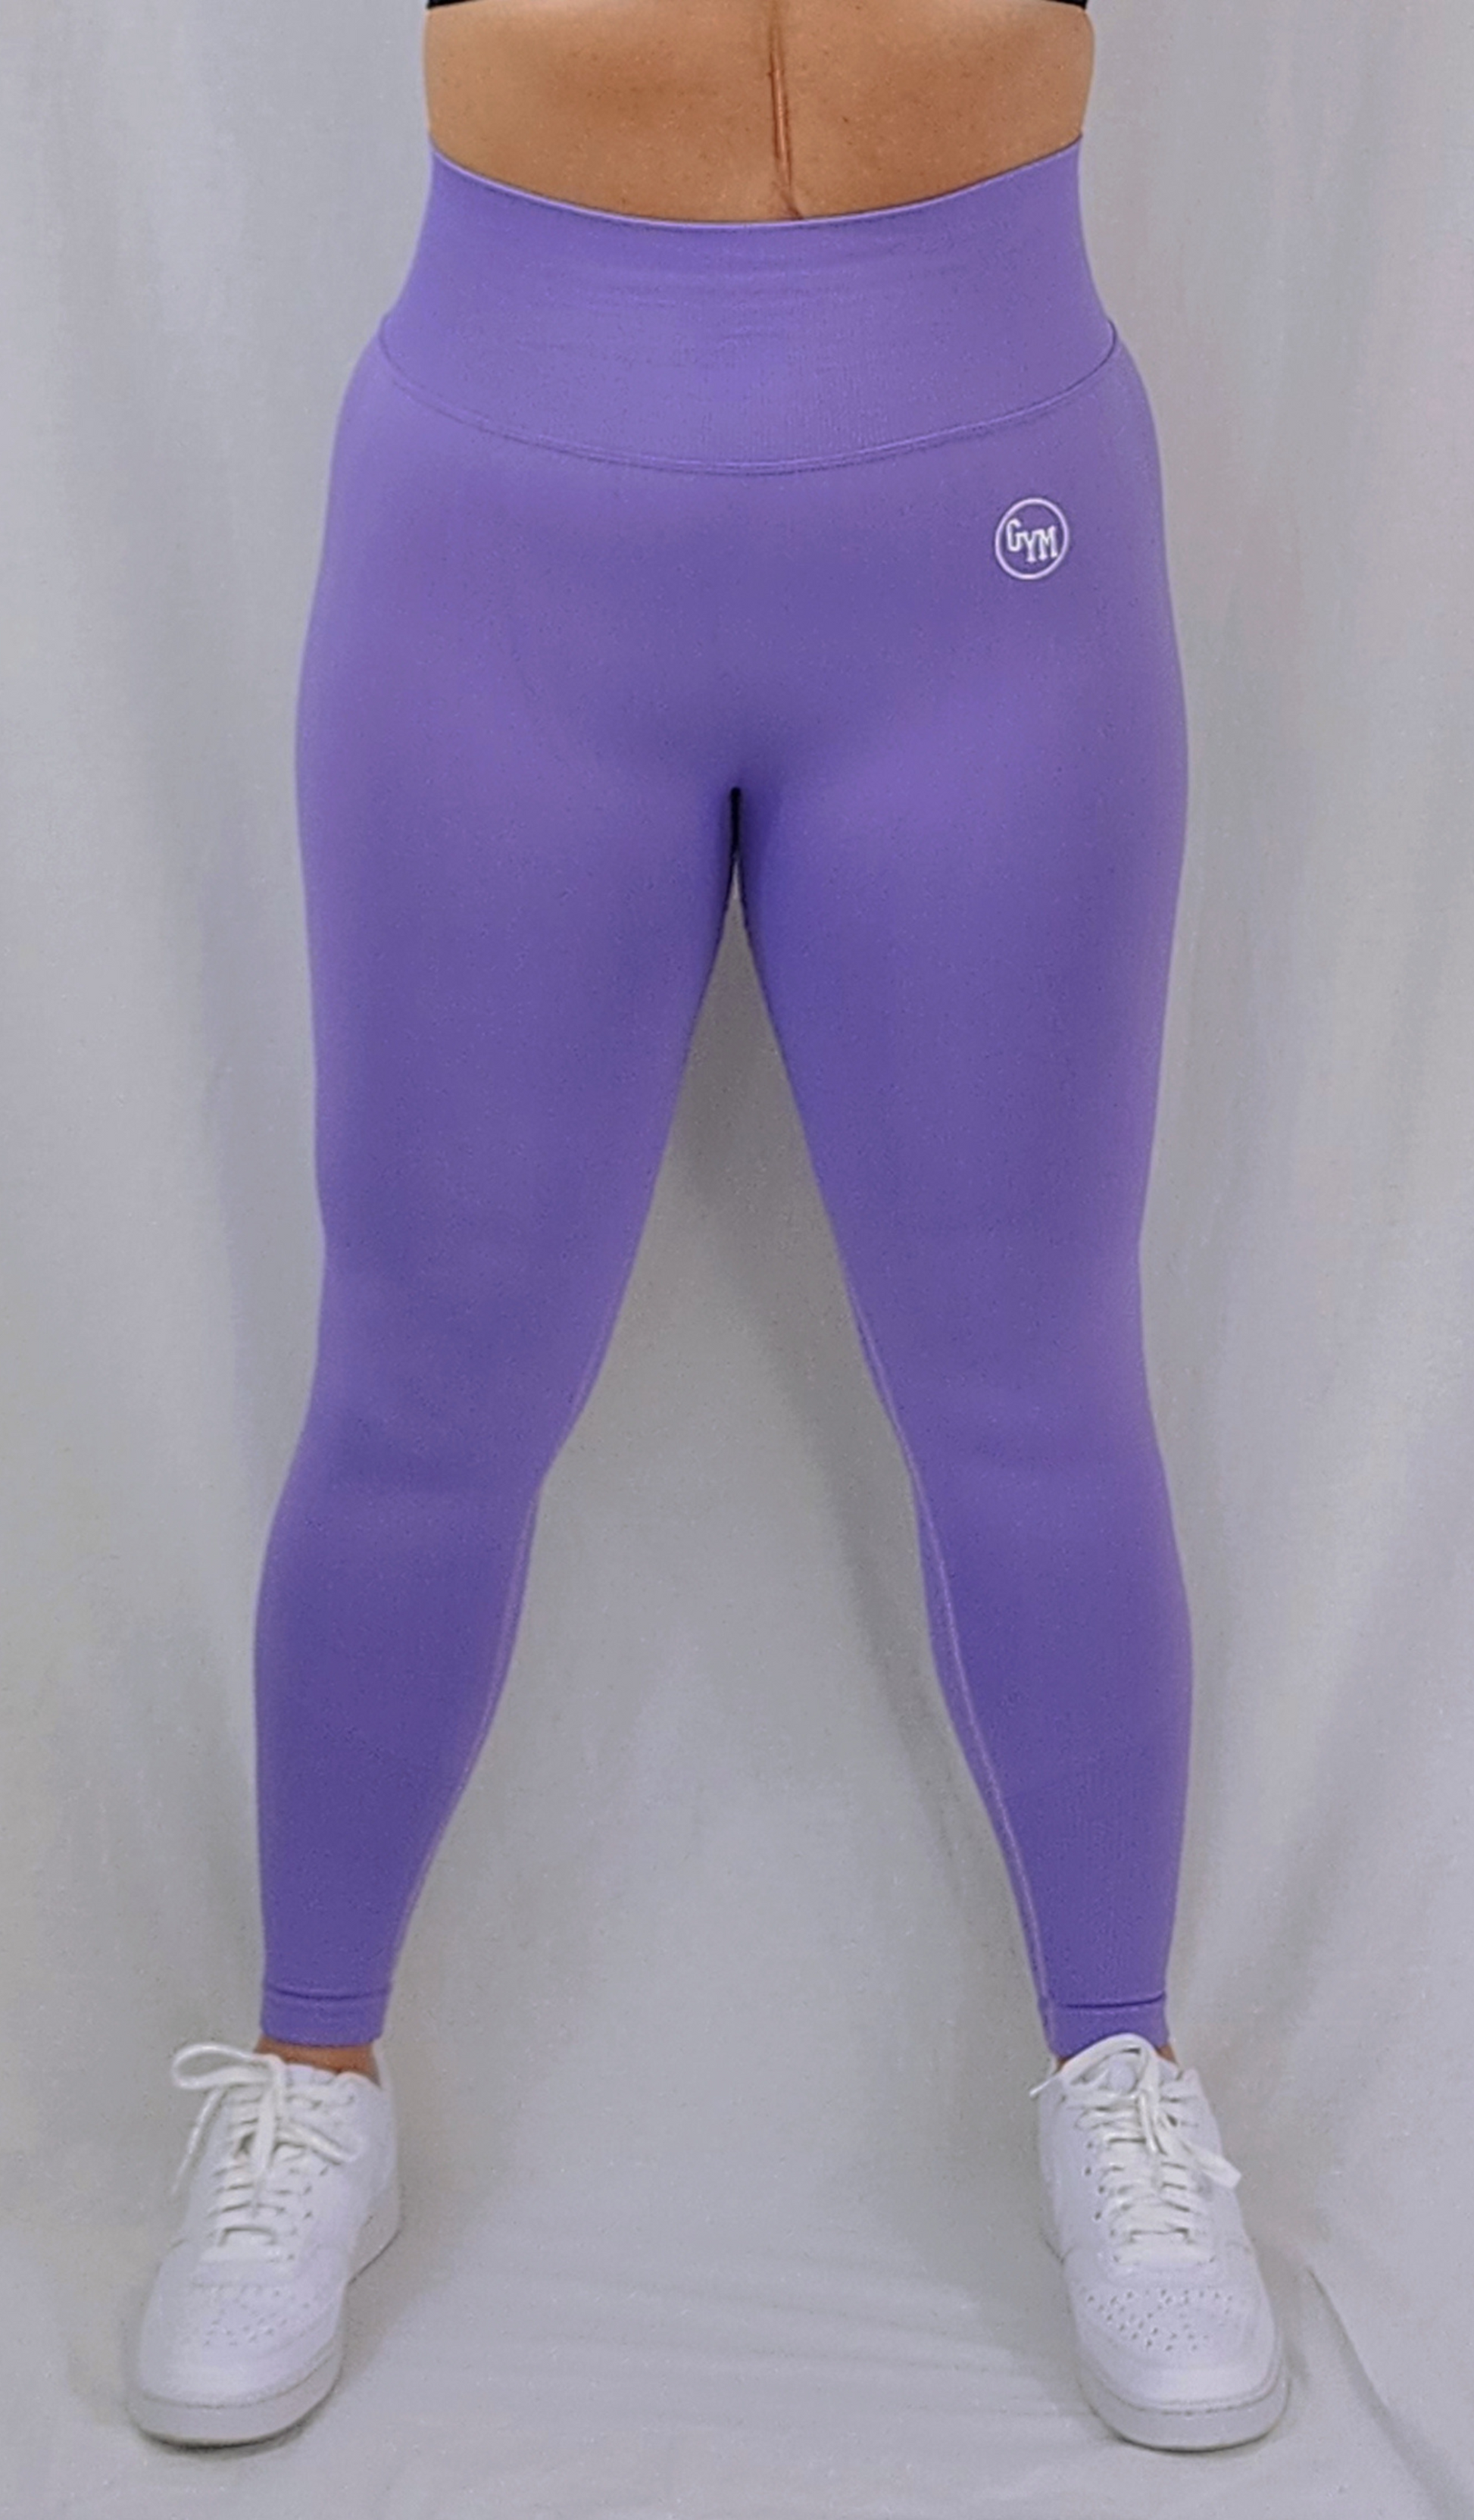 Gym Brand Apparel purple leggings front view.